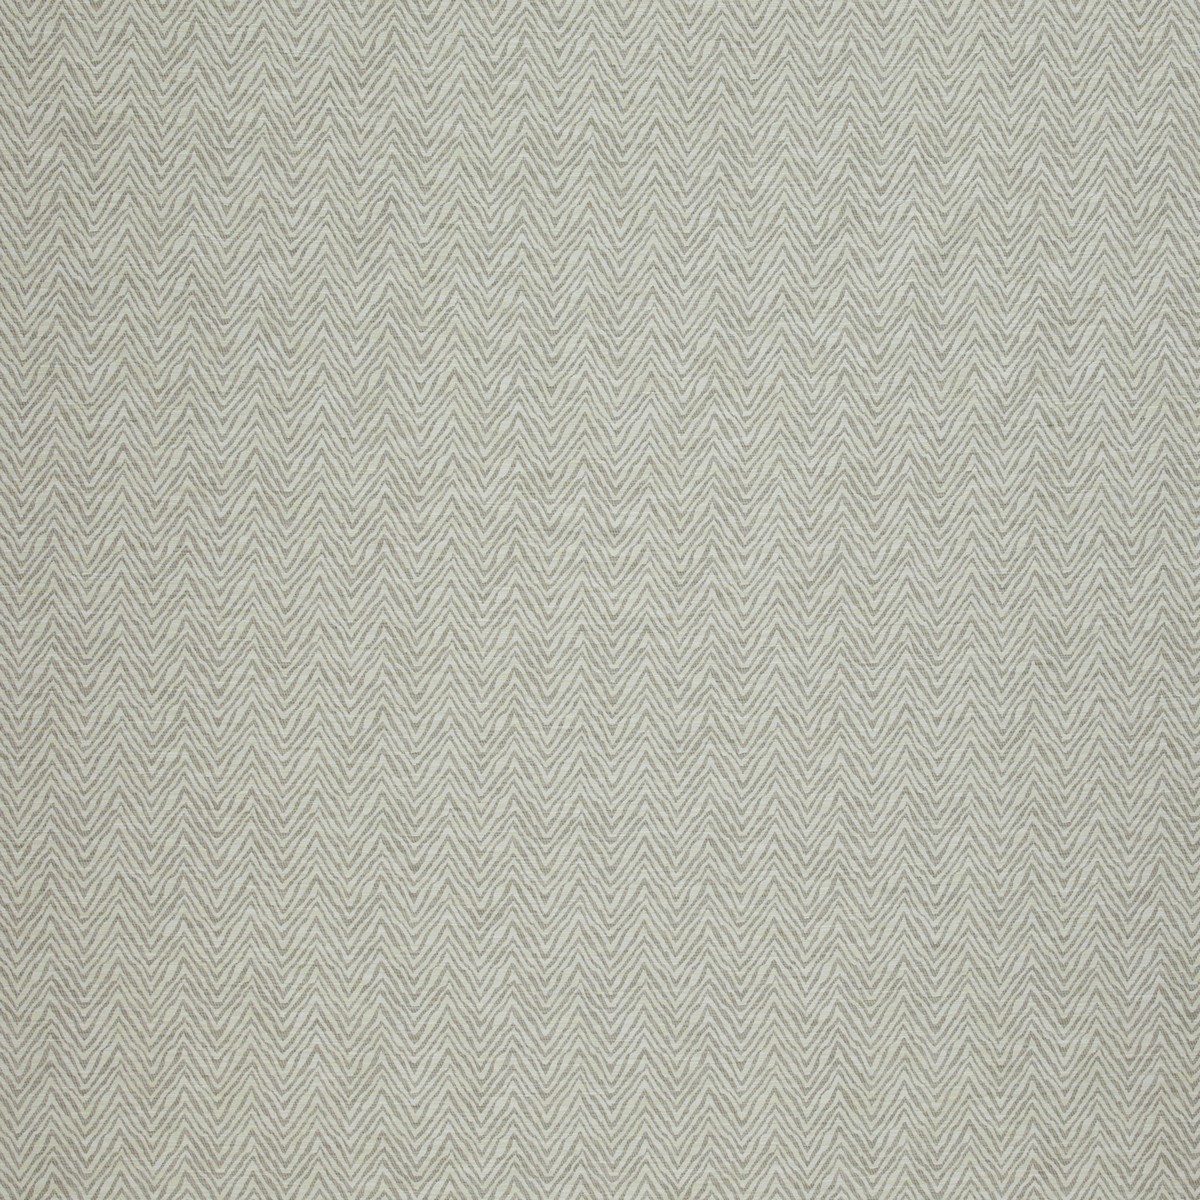 Nagoa Ivory Fabric by iLiv